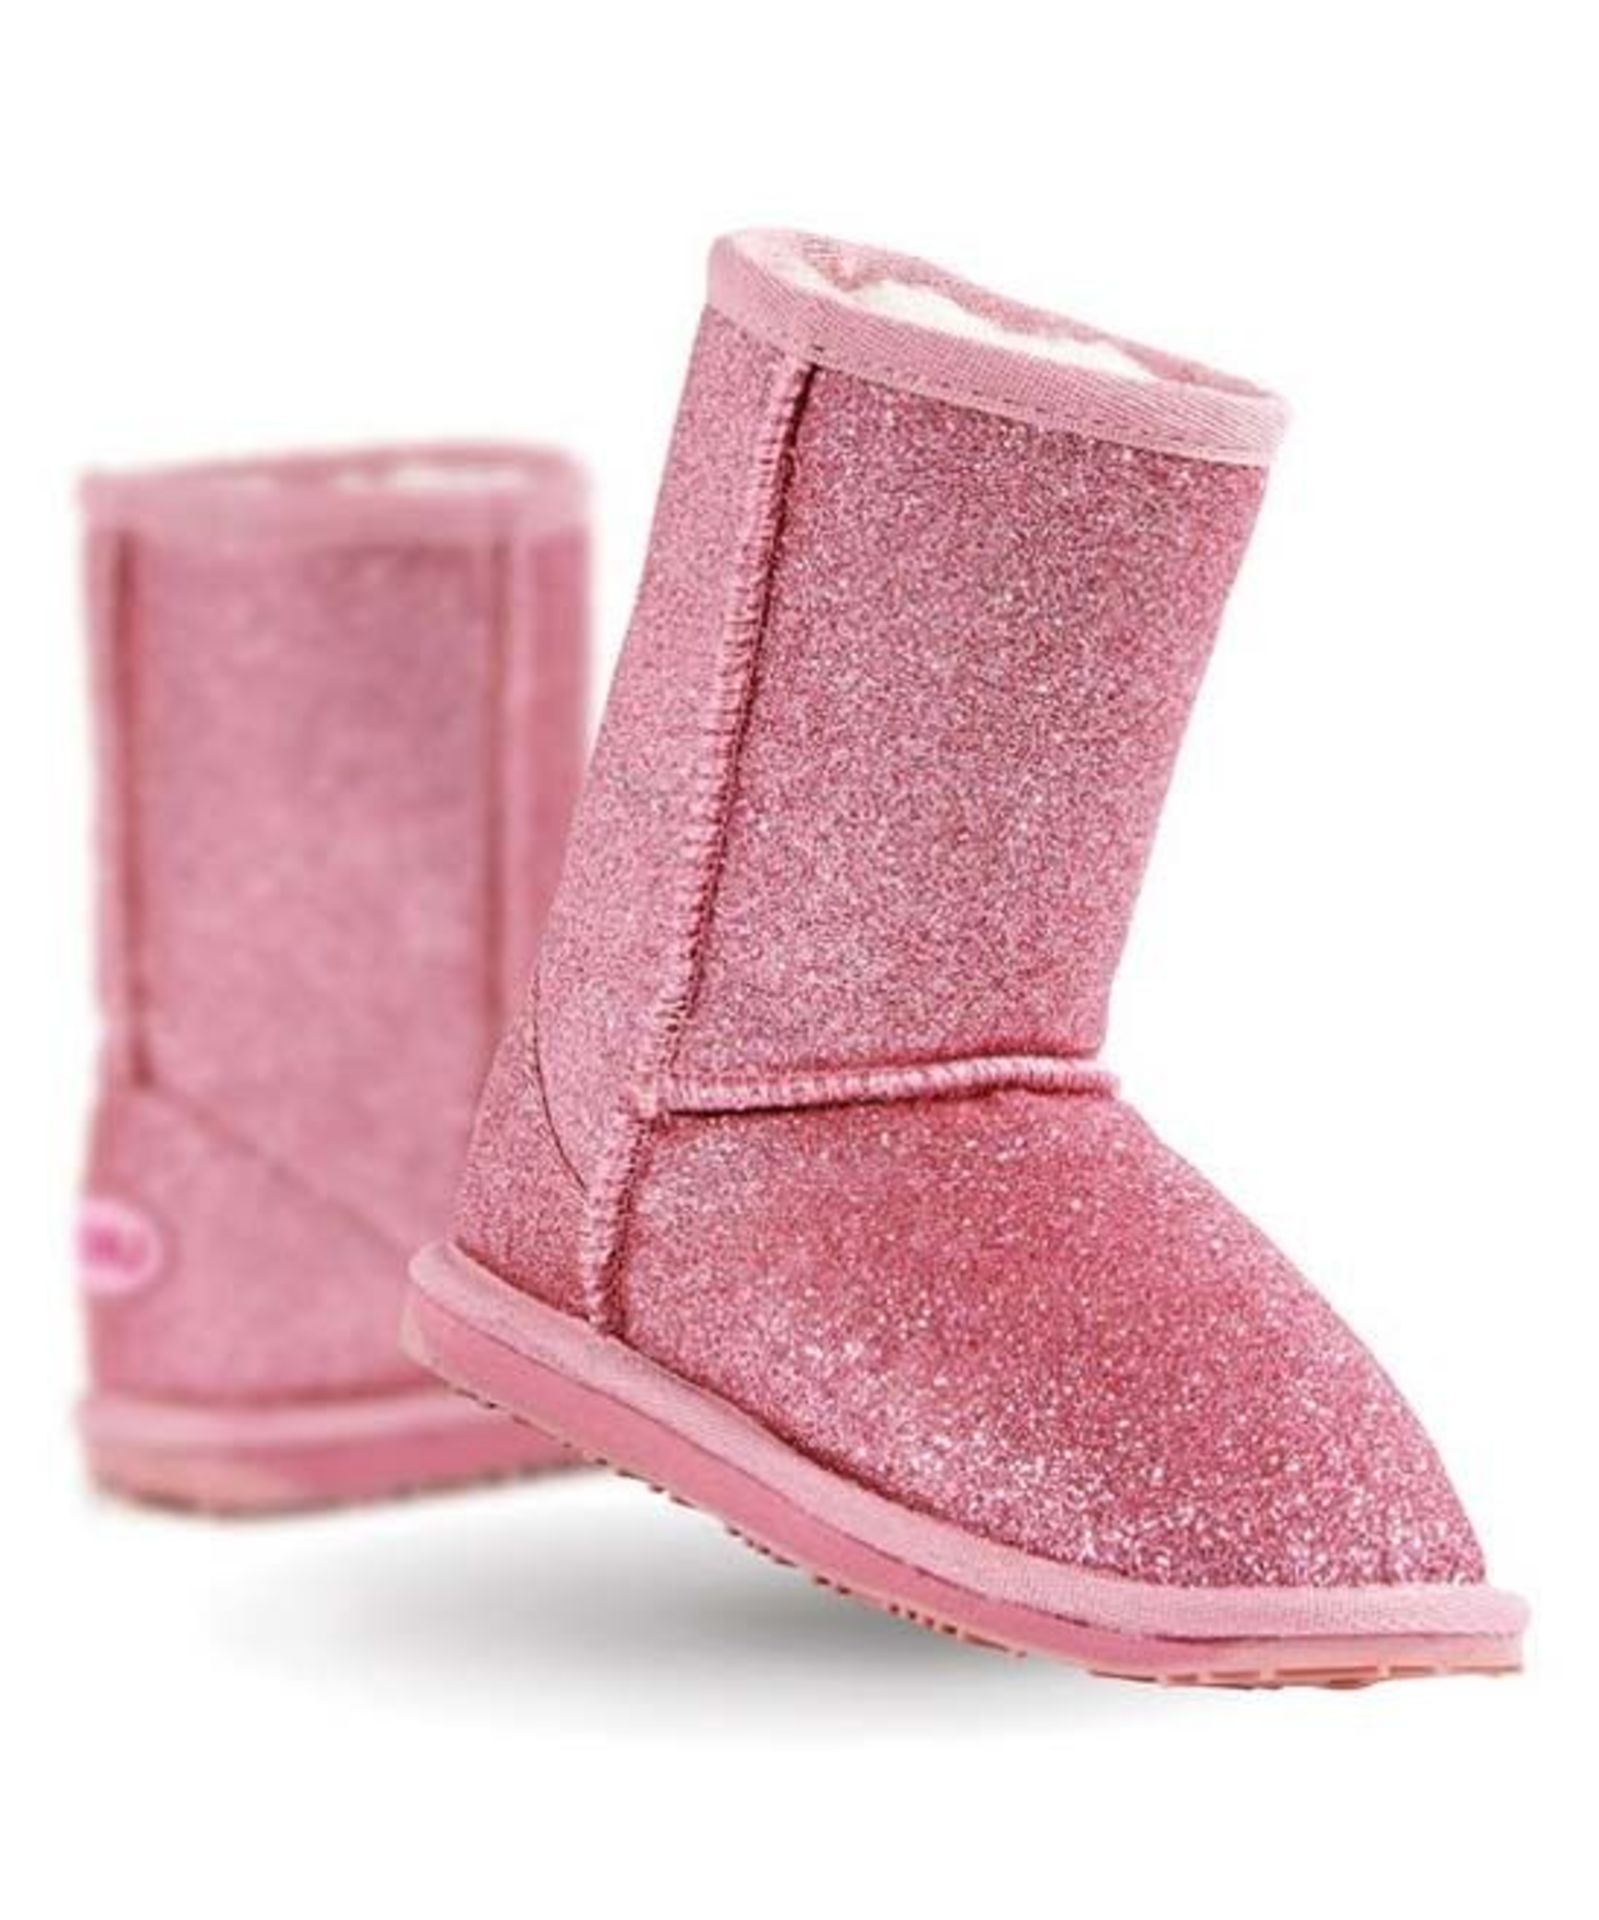 EMU Australia, Pink Sparkle Lo Boot - Kids, UK Size 7/EUR Size 24 (New with box) [Ref: 39761234]